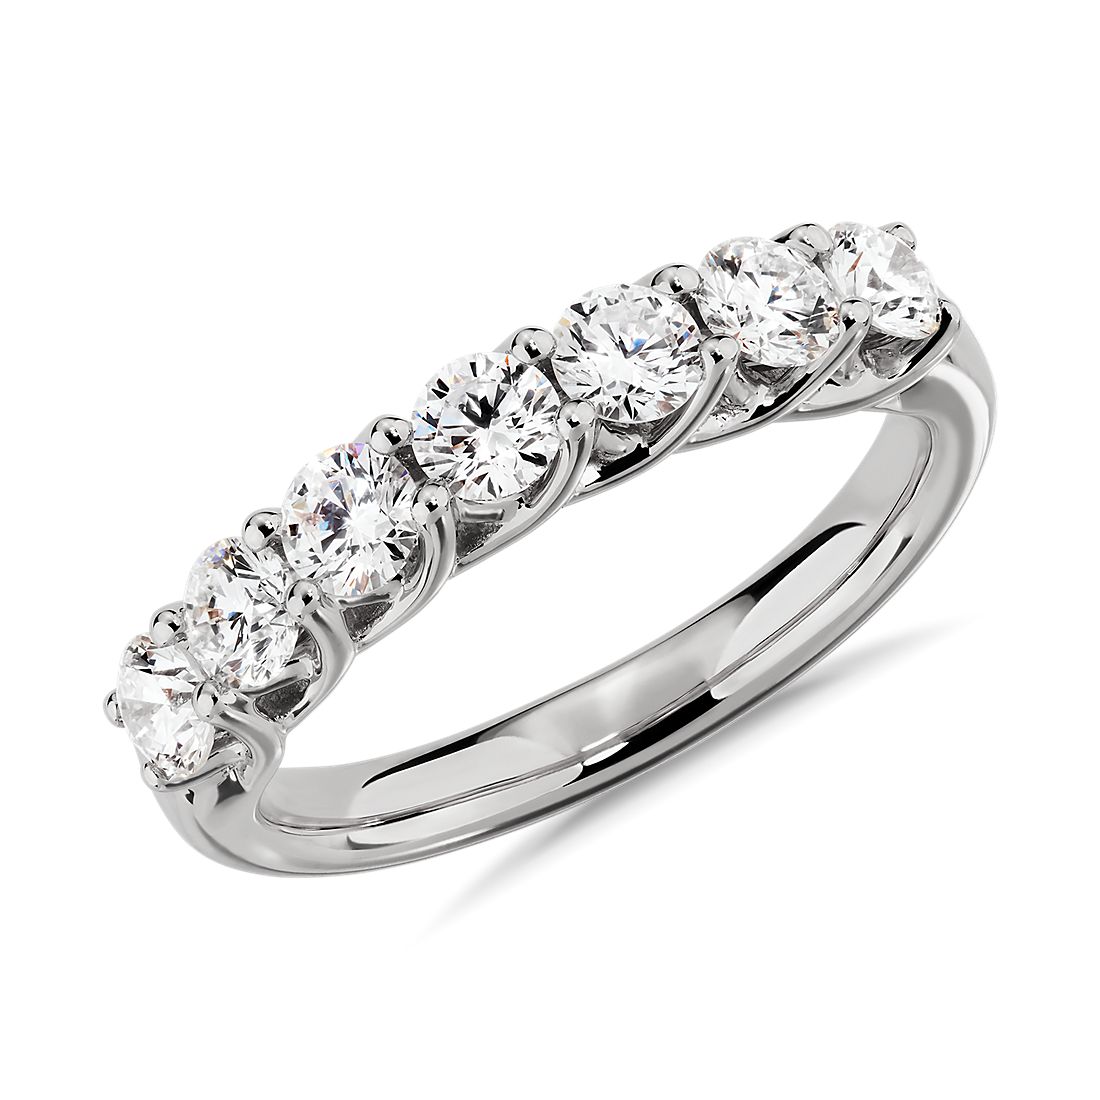 Tessere Seven Stone Diamond Wedding Ring in 14k White Gold - I/SI2 (0.95 ct. tw.)